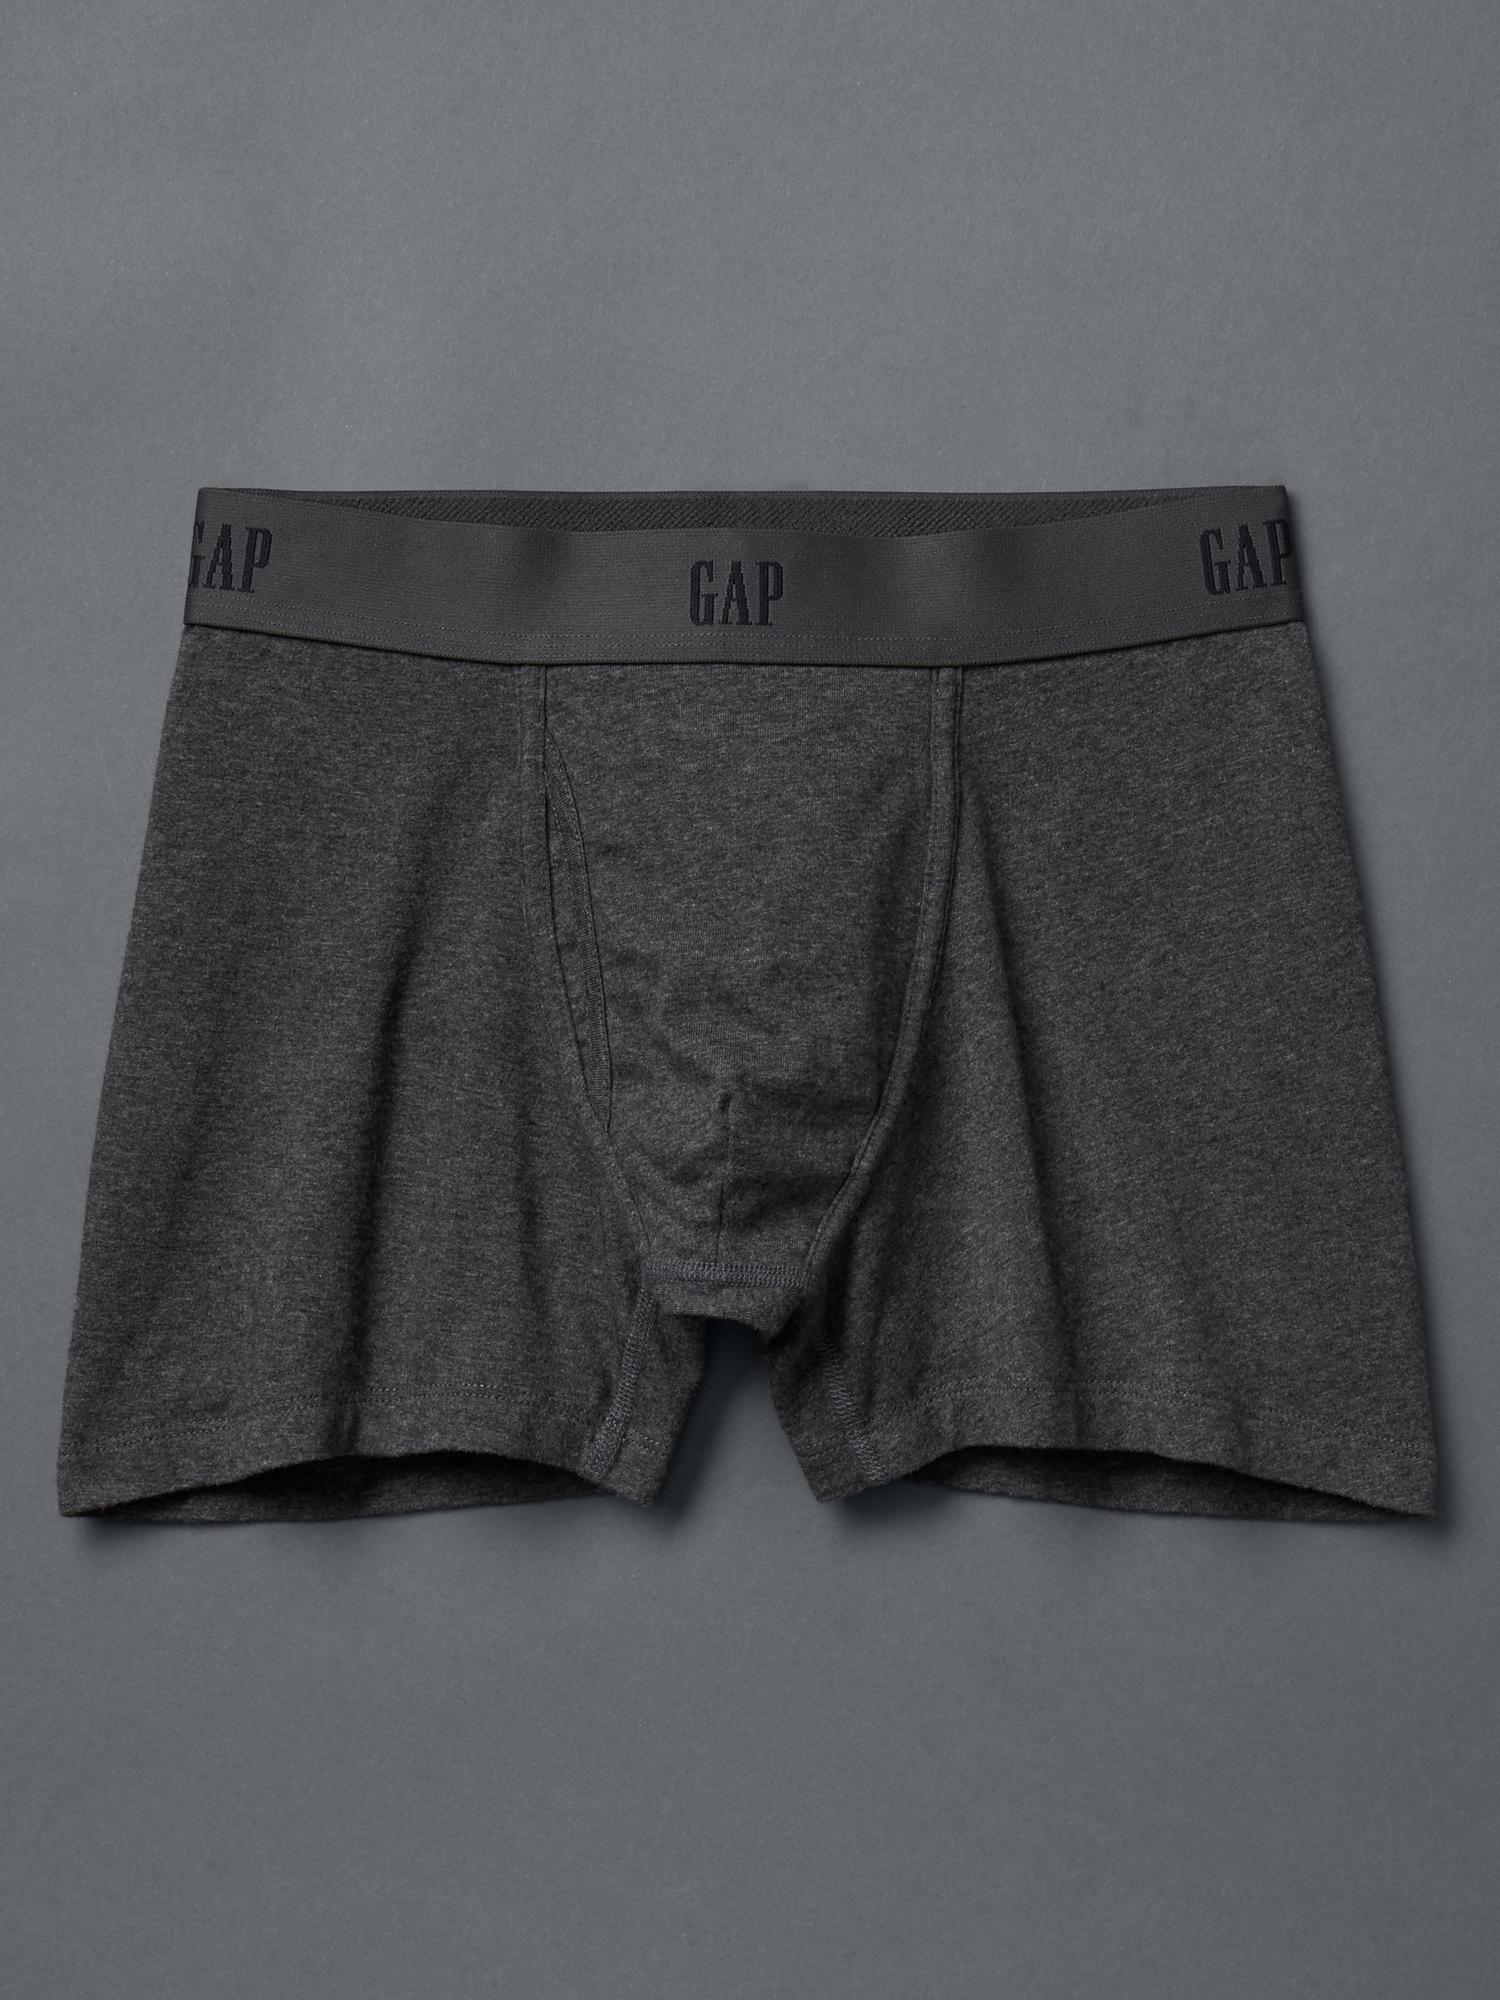 Gap Men's Cotton Boxers Size S (30-31) Star Wars Logo Black Multi